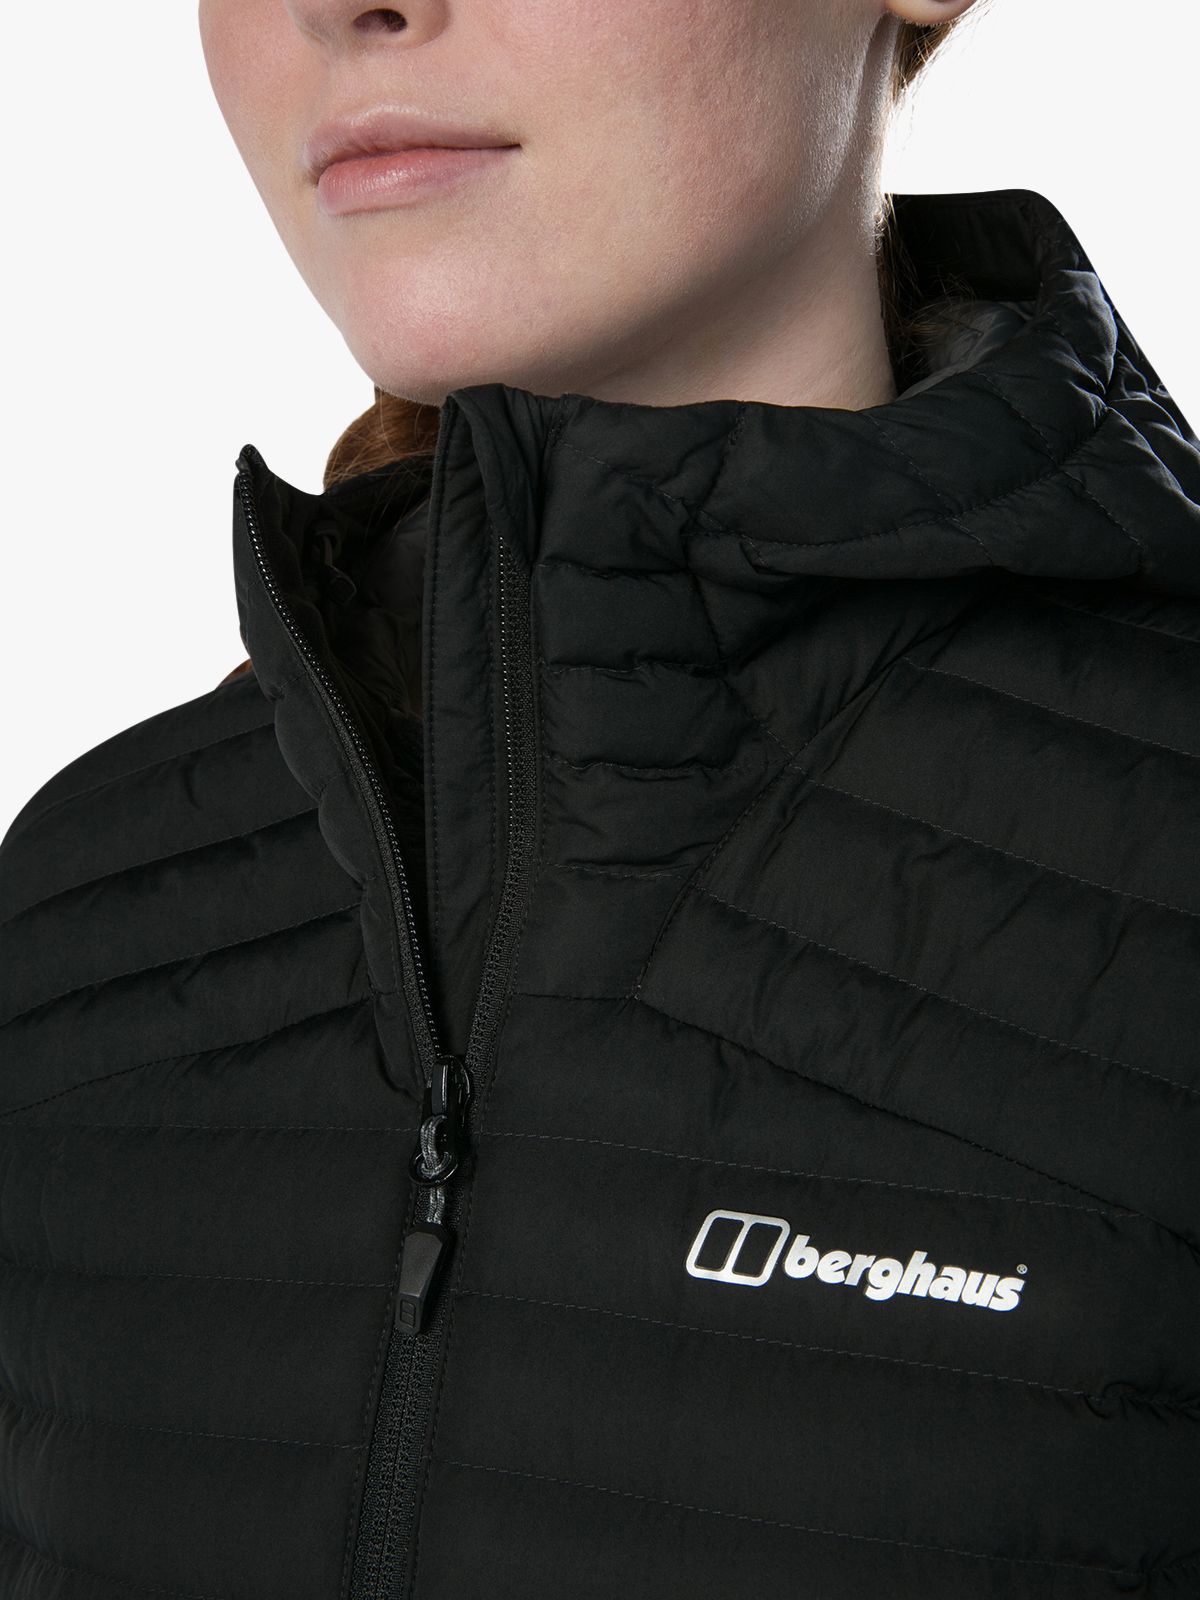 Berghaus Nula Micro Women's Insulated Jacket, Black, 8